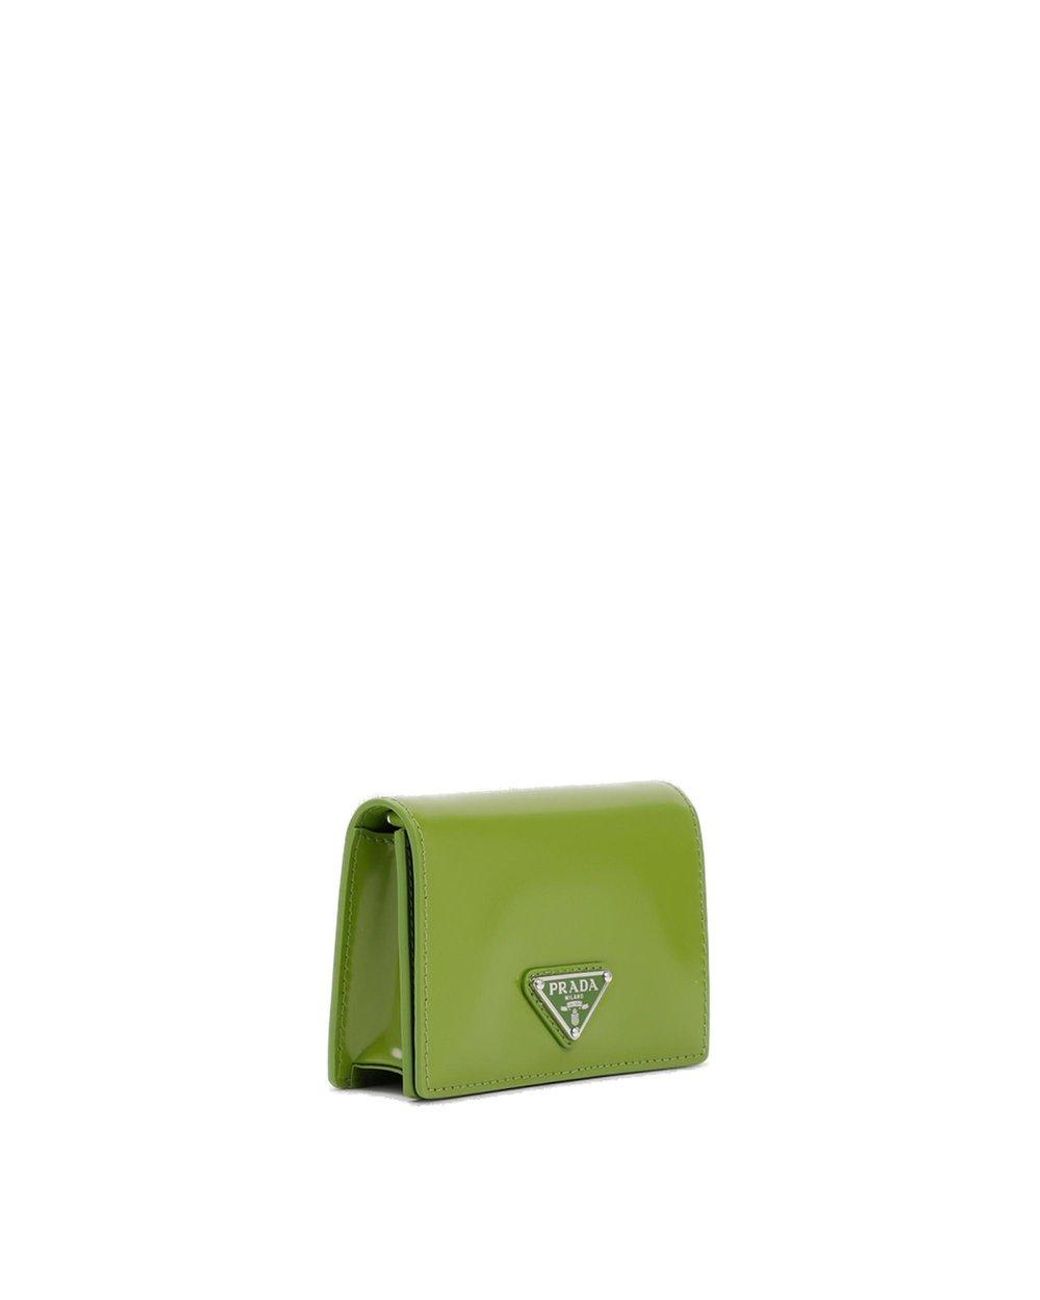 𝐩𝐢𝐧𝐭𝐞𝐫𝐞𝐬𝐭: 𝐣𝐮𝐥𝐢𝐚𝐚𝐢𝐬𝐝𝐮𝐦𝐛 | Green prada bag, Green  aesthetic, Mint green aesthetic